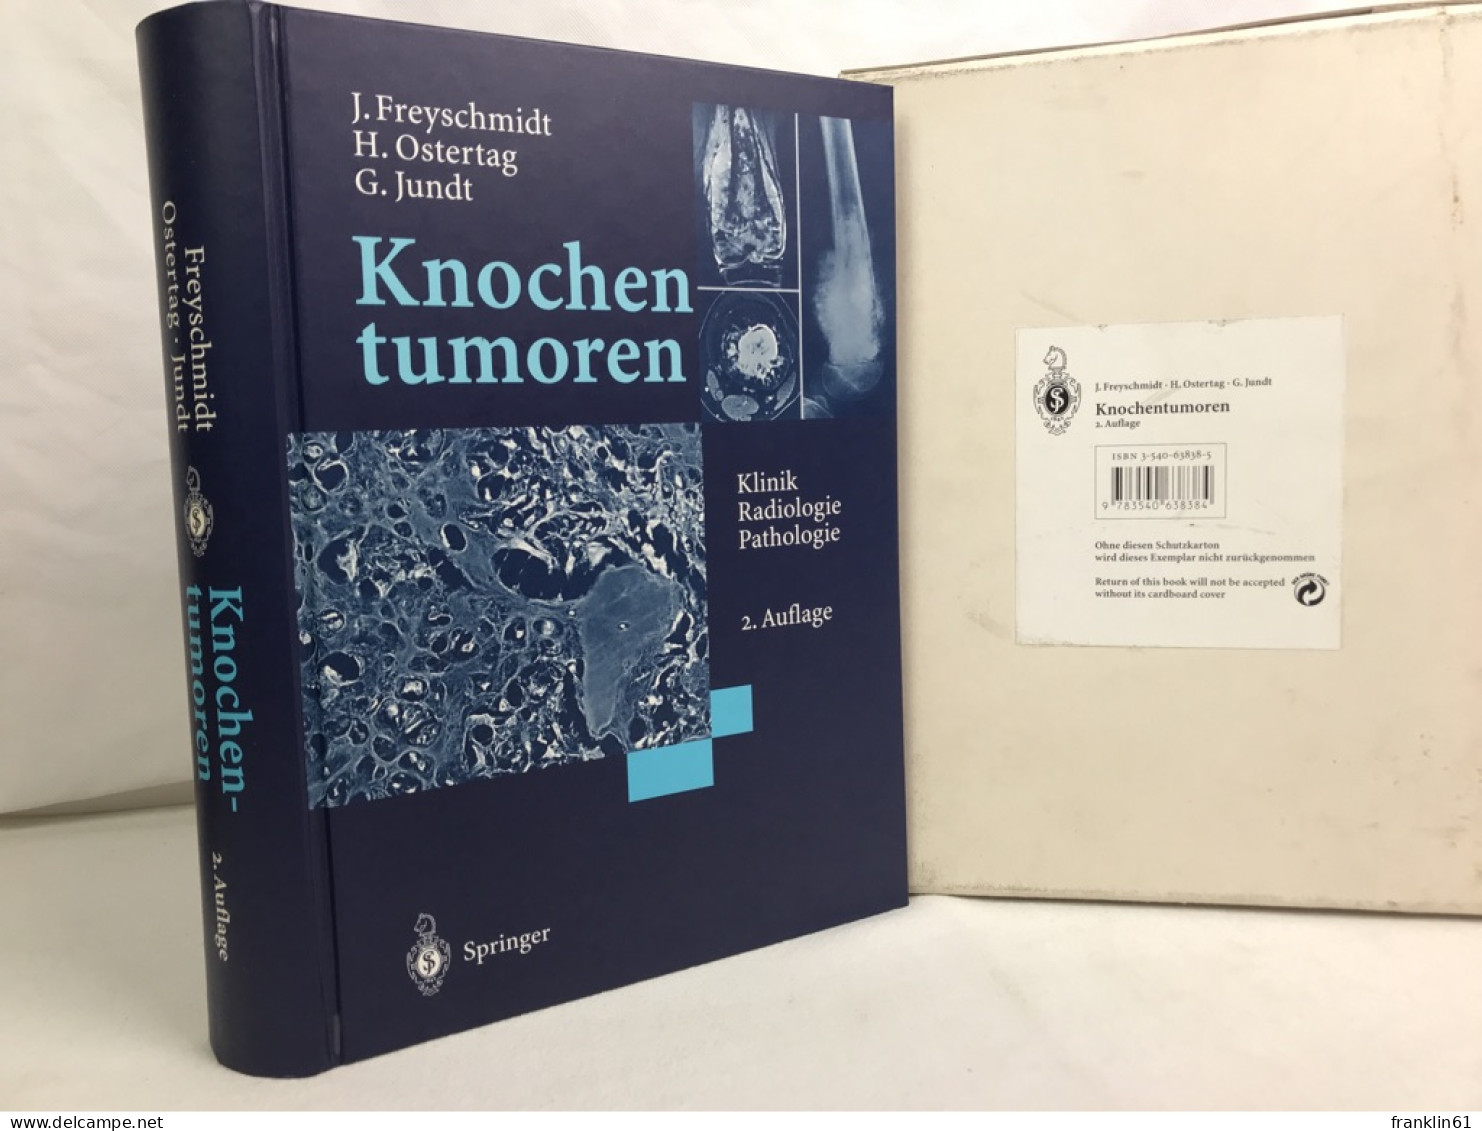 Knochentumoren : Klinik, Radiologie, Pathologie. - Gezondheid & Medicijnen